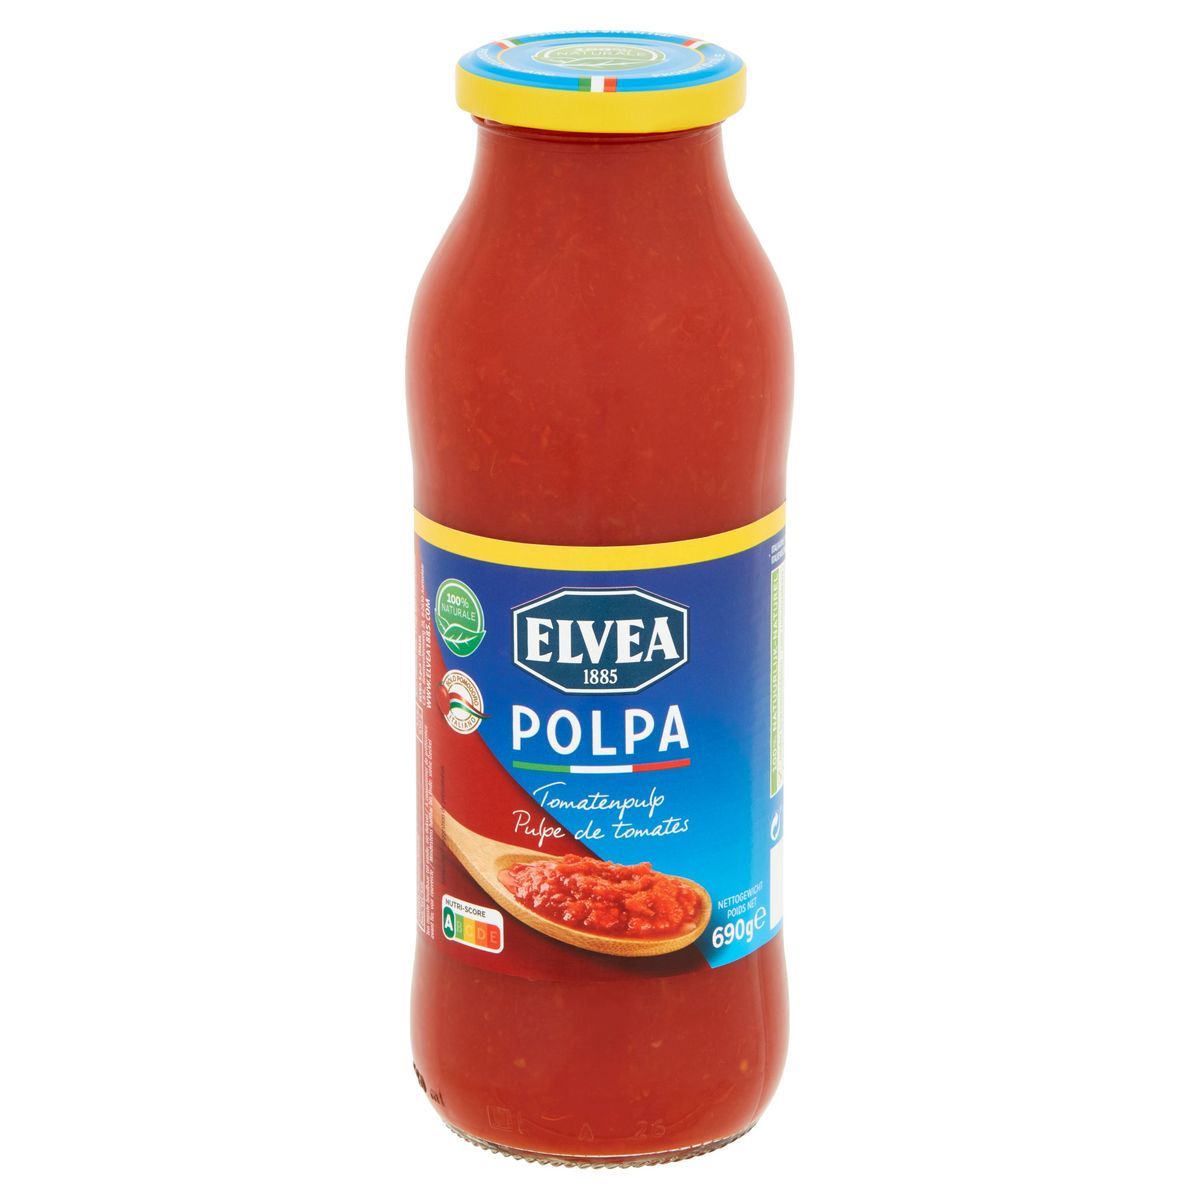 Elvea Polpa Pulpe de Tomates 690 g